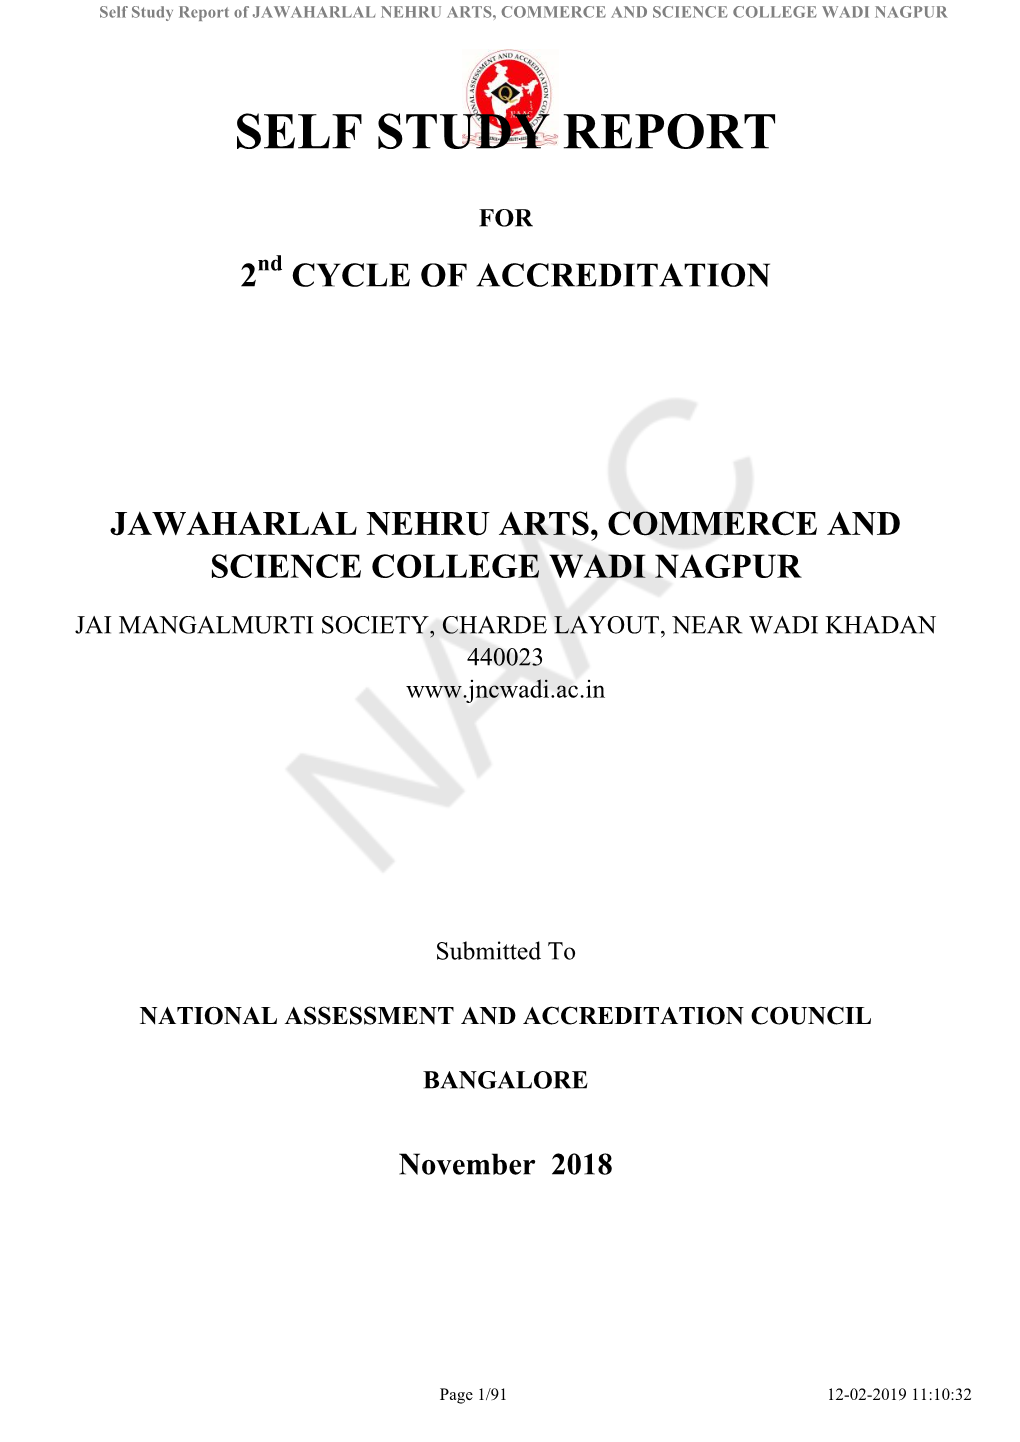 Self Study Report of JAWAHARLAL NEHRU ARTS, COMMERCE and SCIENCE COLLEGE WADI NAGPUR